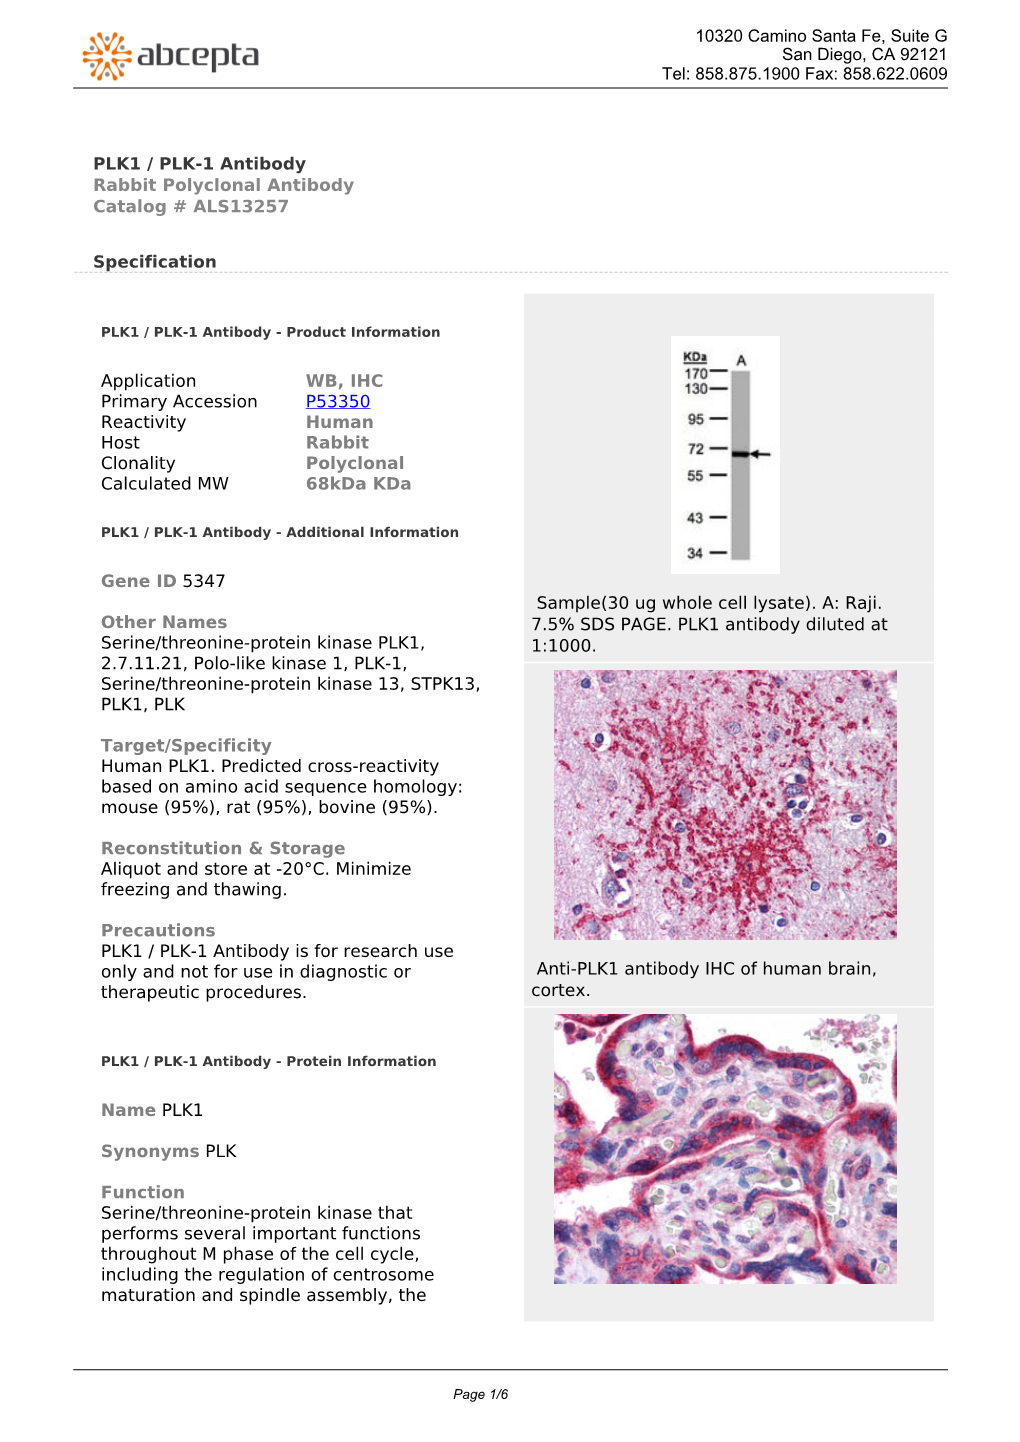 PLK1 / PLK-1 Antibody Rabbit Polyclonal Antibody Catalog # ALS13257